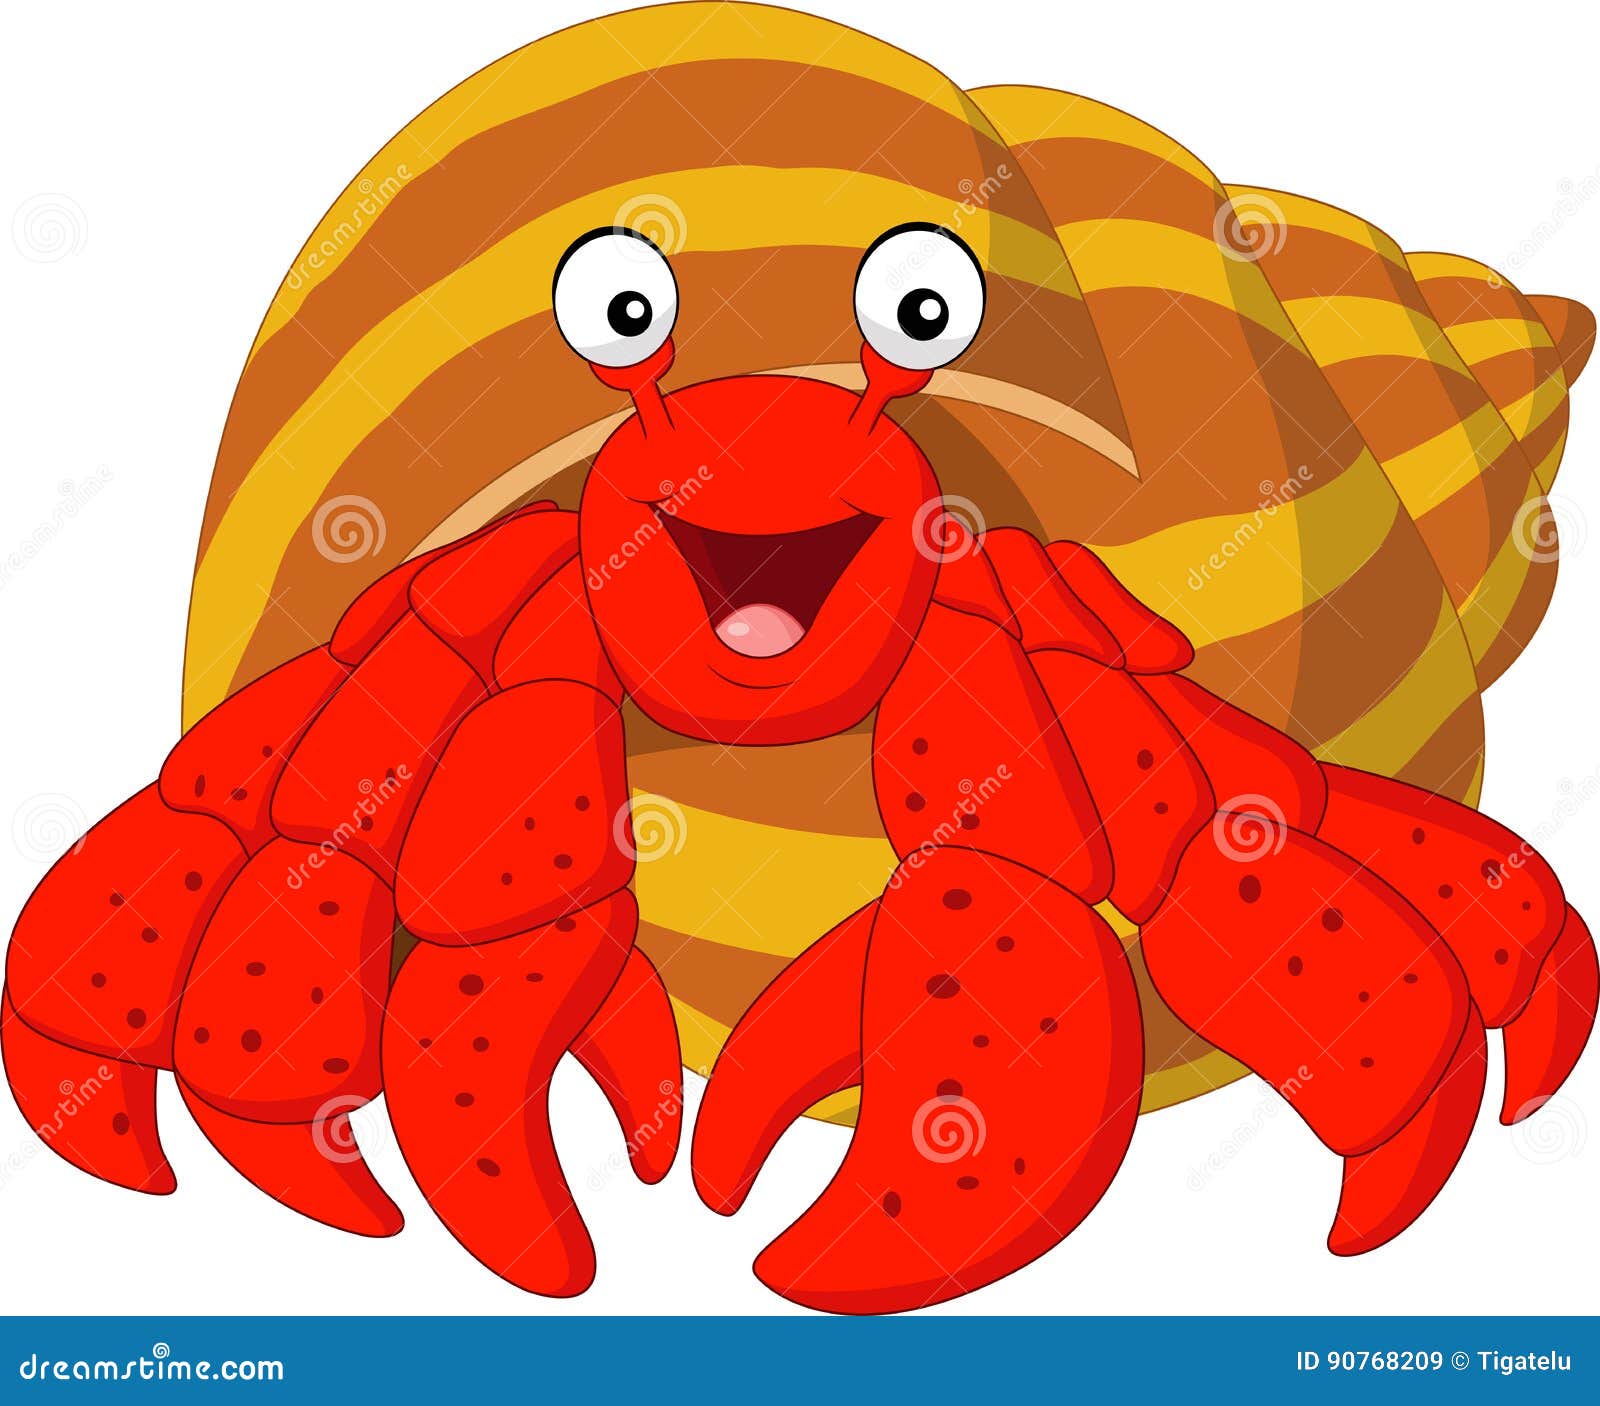 Cartoon hermit crab stock vector. Illustration of drawing - 90768209